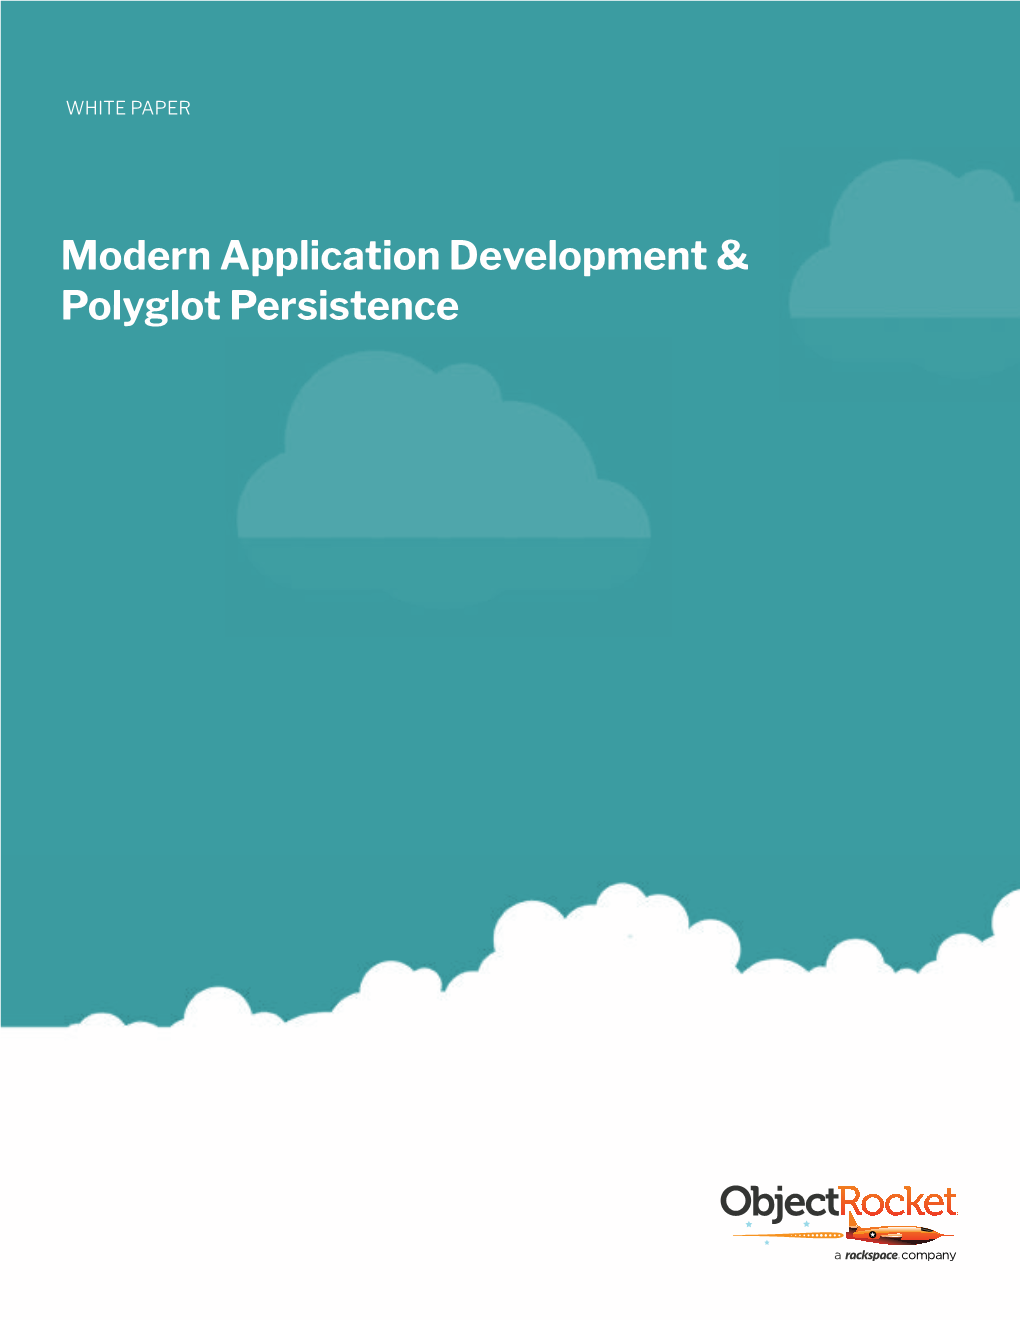 Modern Application Development & Polyglot Persistence